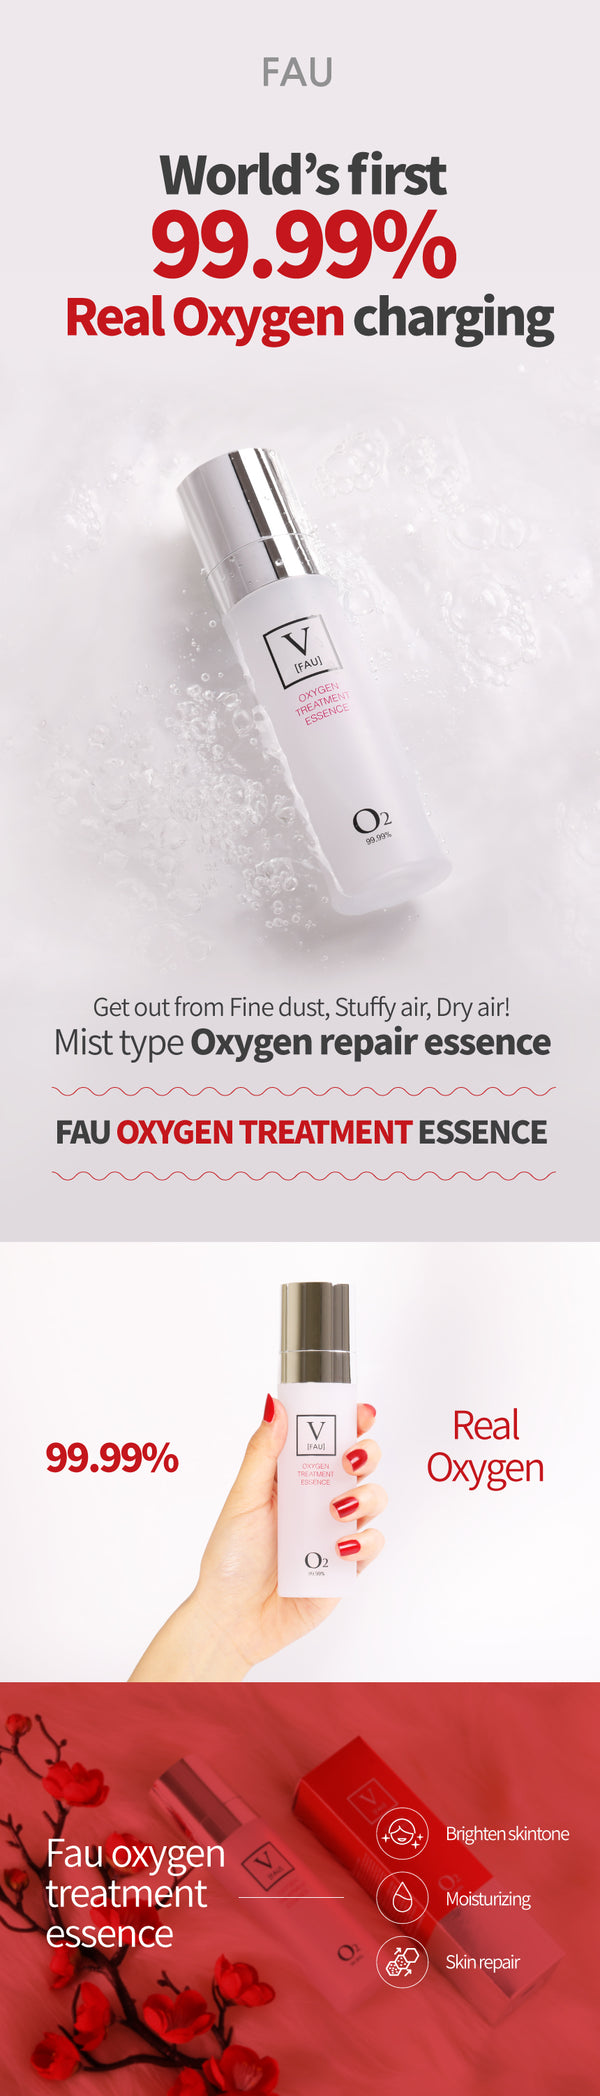 FAU Oxygen Treatment Essence Information 1